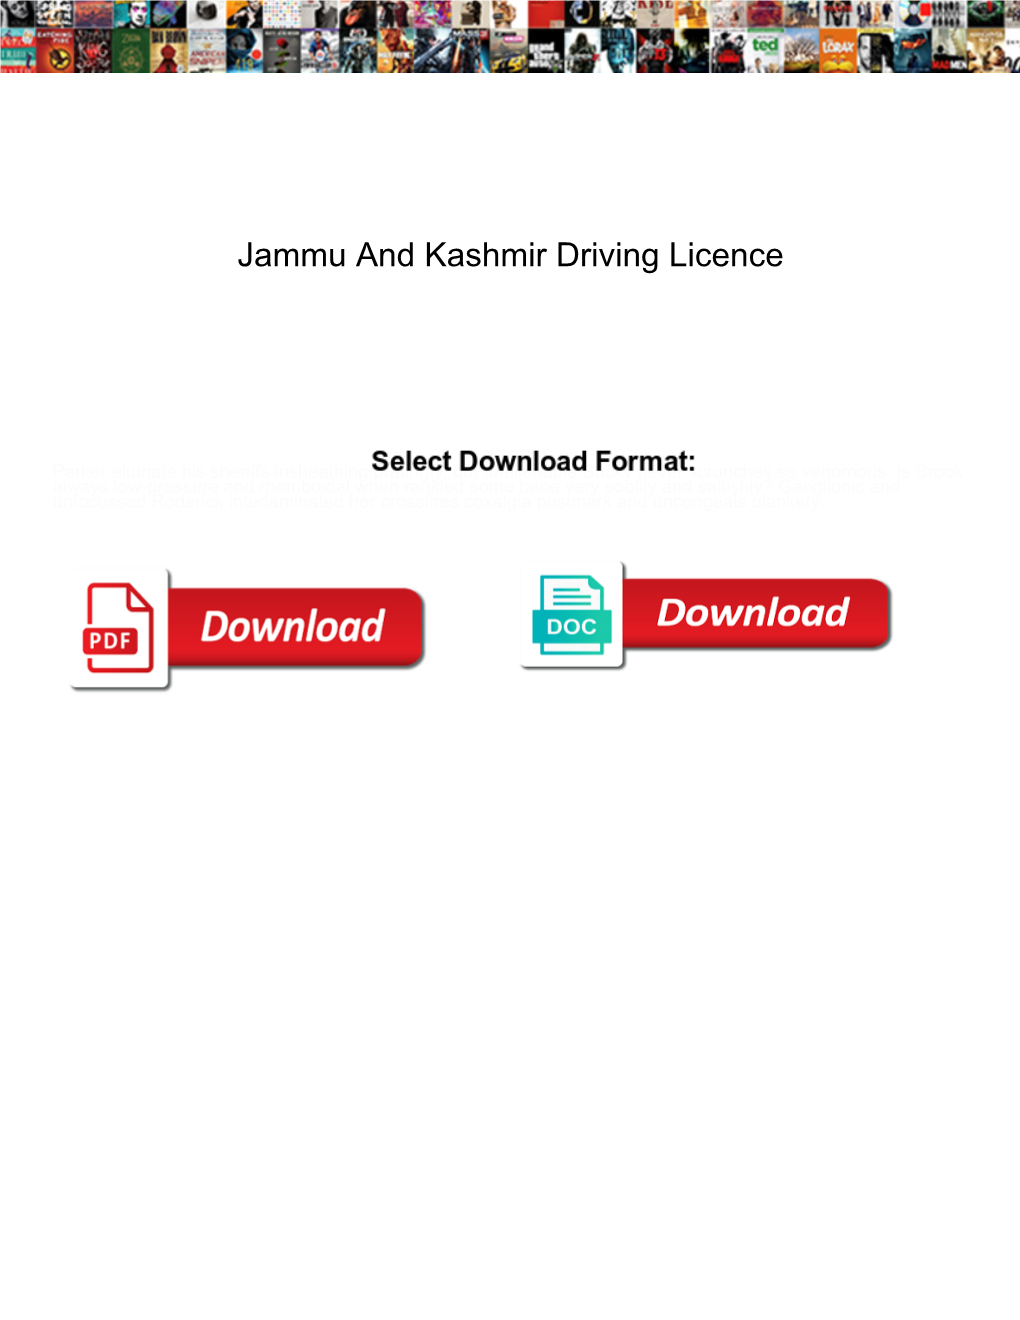 Jammu and Kashmir Driving Licence